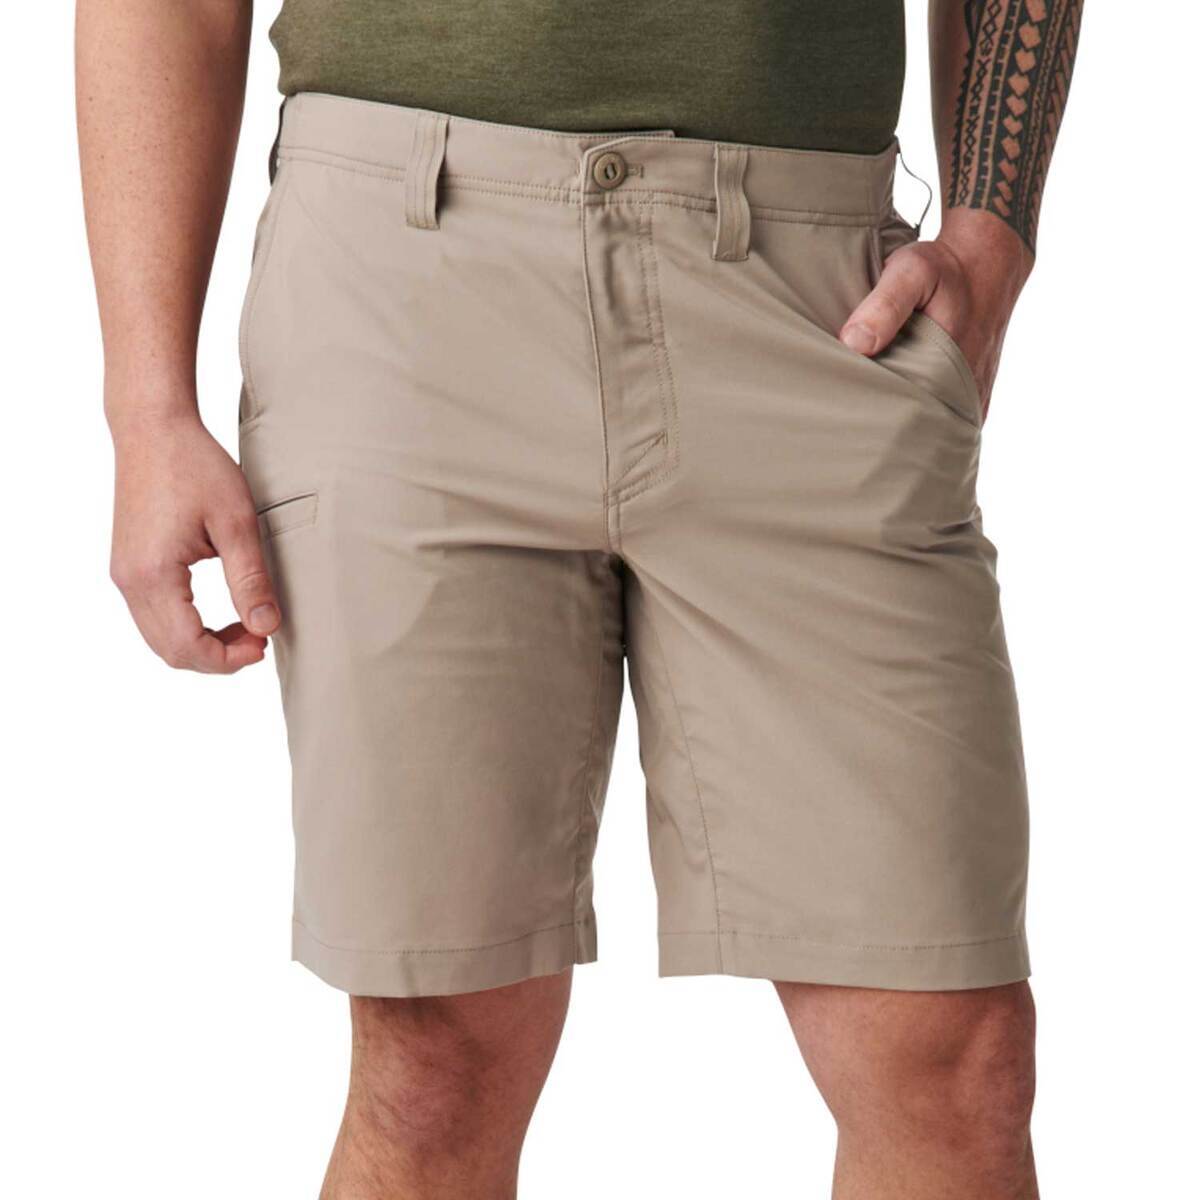 5.11 Tactical Dart Shorts for Men - Badlands Tan - 34